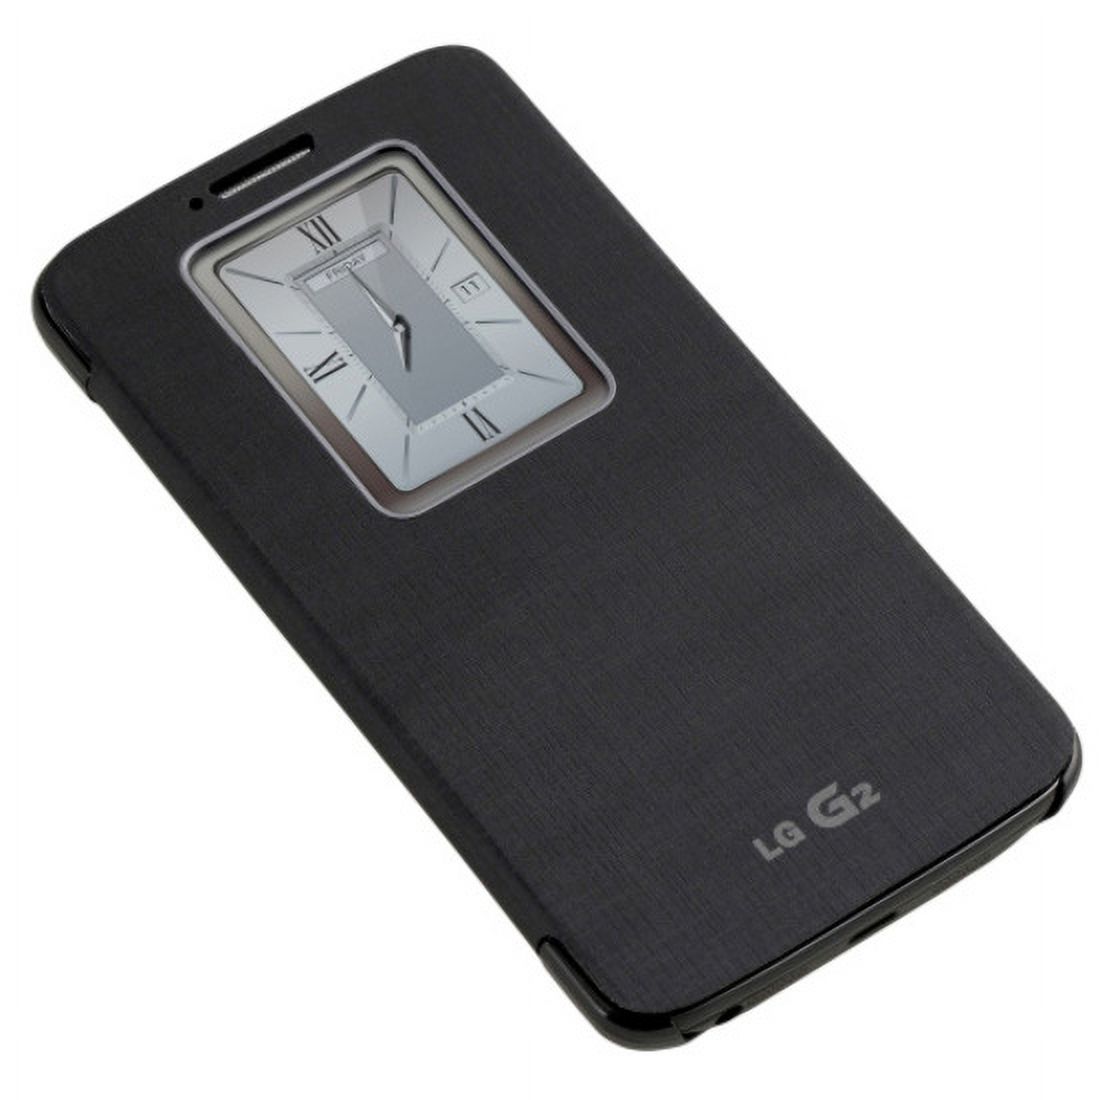 LG QuickWindow Carrying Case (Folio) Smartphone, Black - image 4 of 5